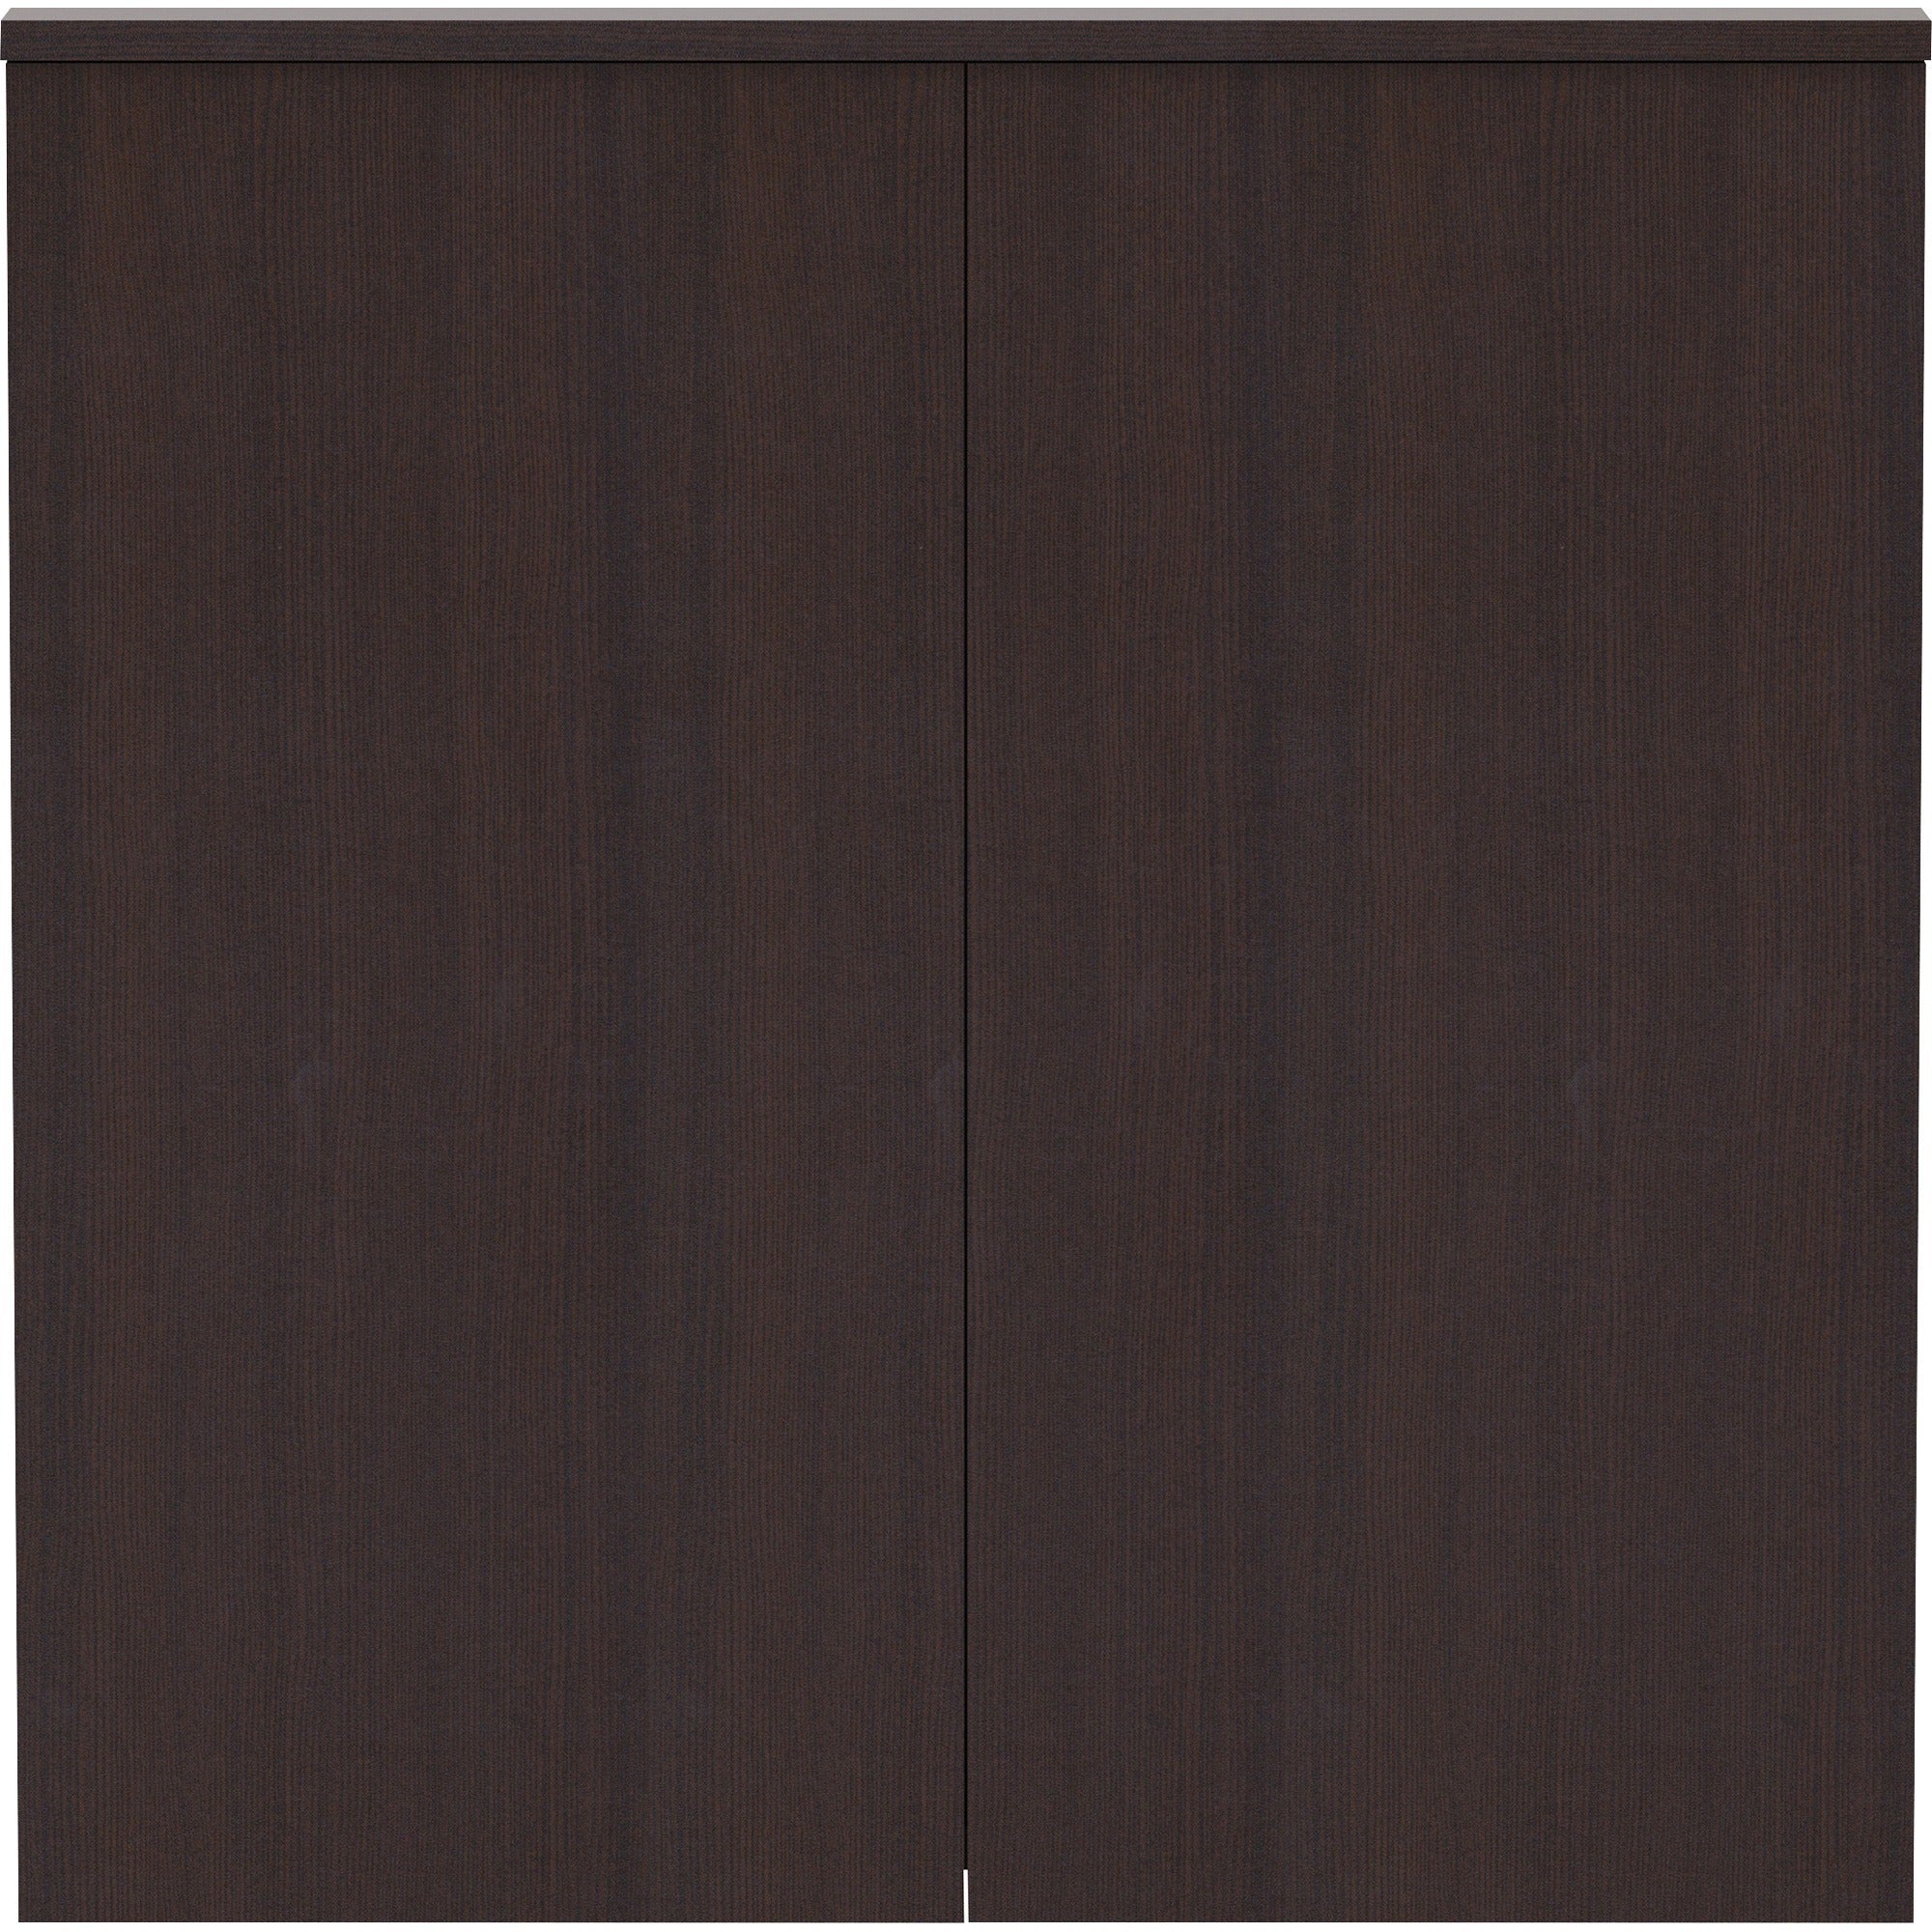 lorell-dry-erase-whiteboard-presentation-cabinet-hinged-door-dry-erase-surface-1-each-473-x-473-x-48_llr18275 - 2